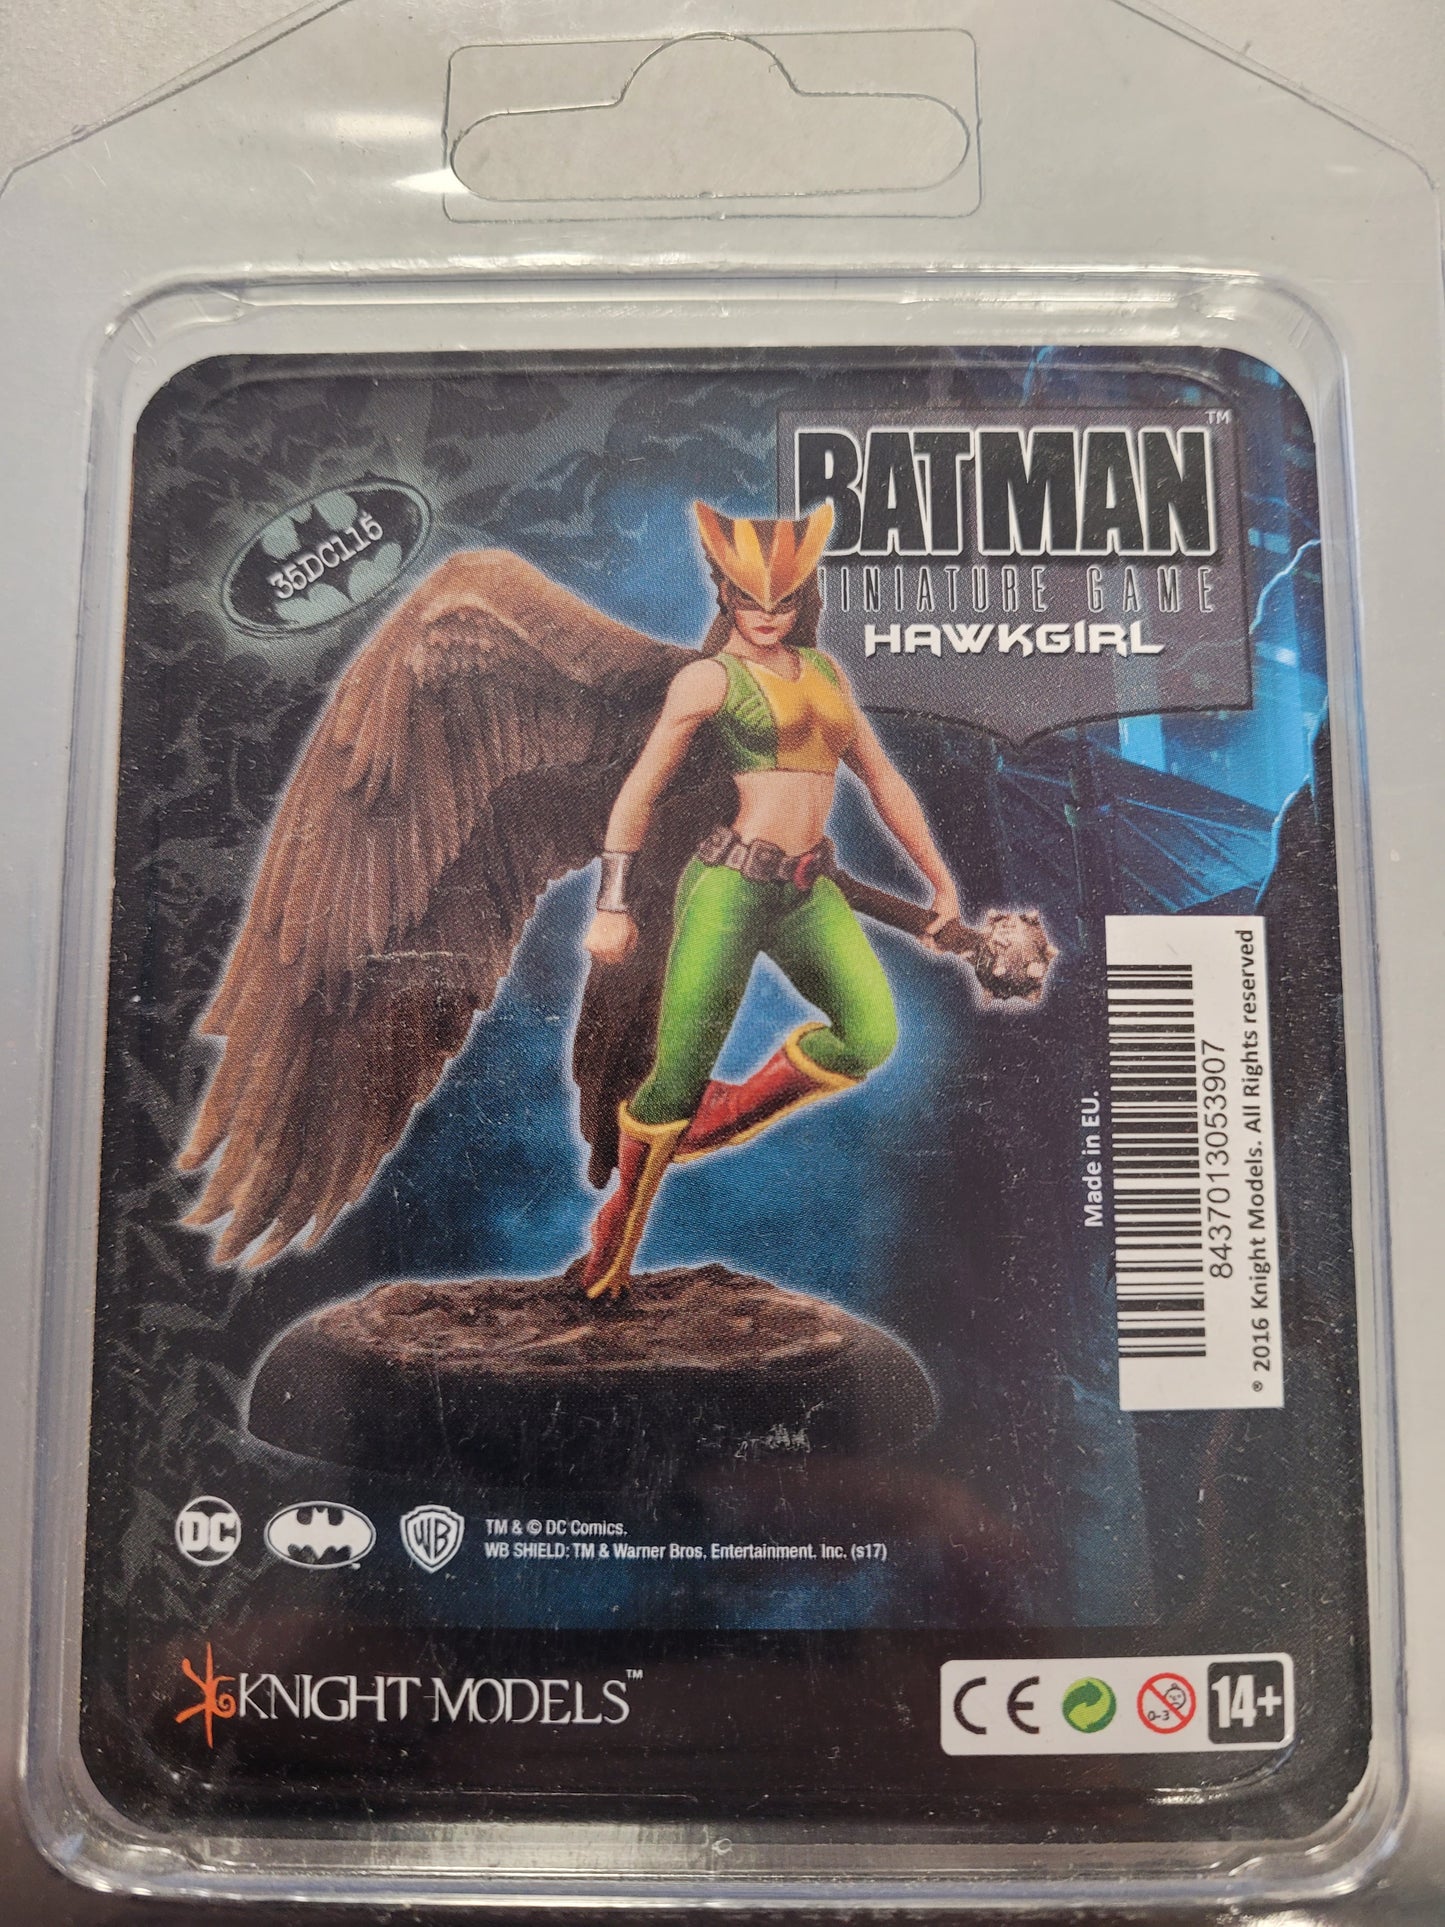 Batman Miniature Games: Hawkgirl